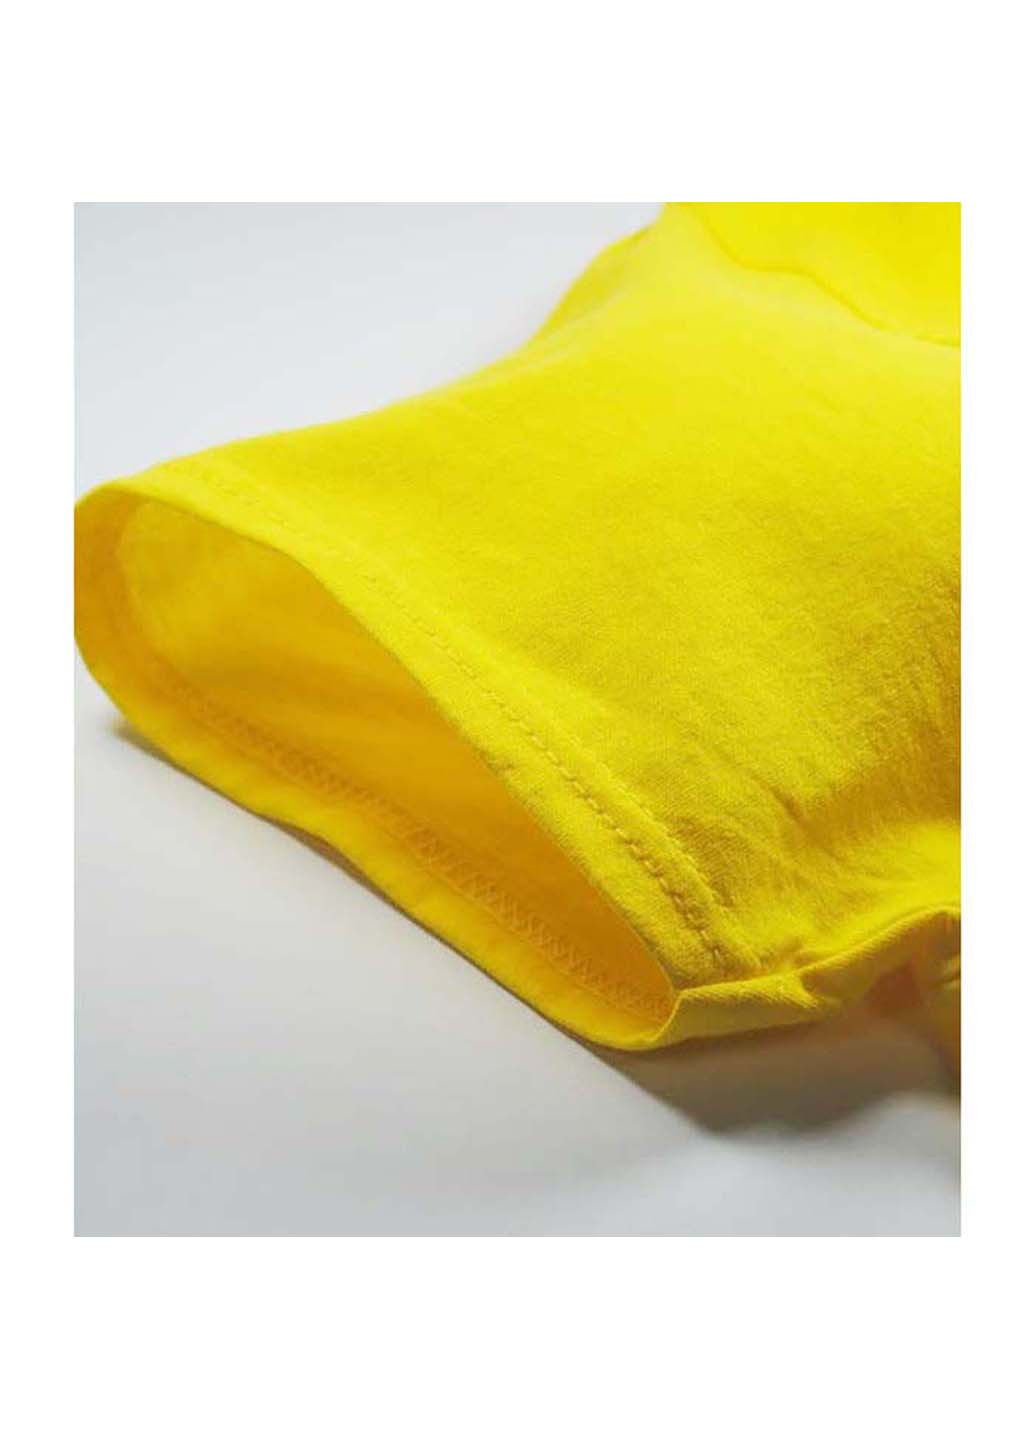 Желтая демисезон футболка Fruit of the Loom D0613720K2XL